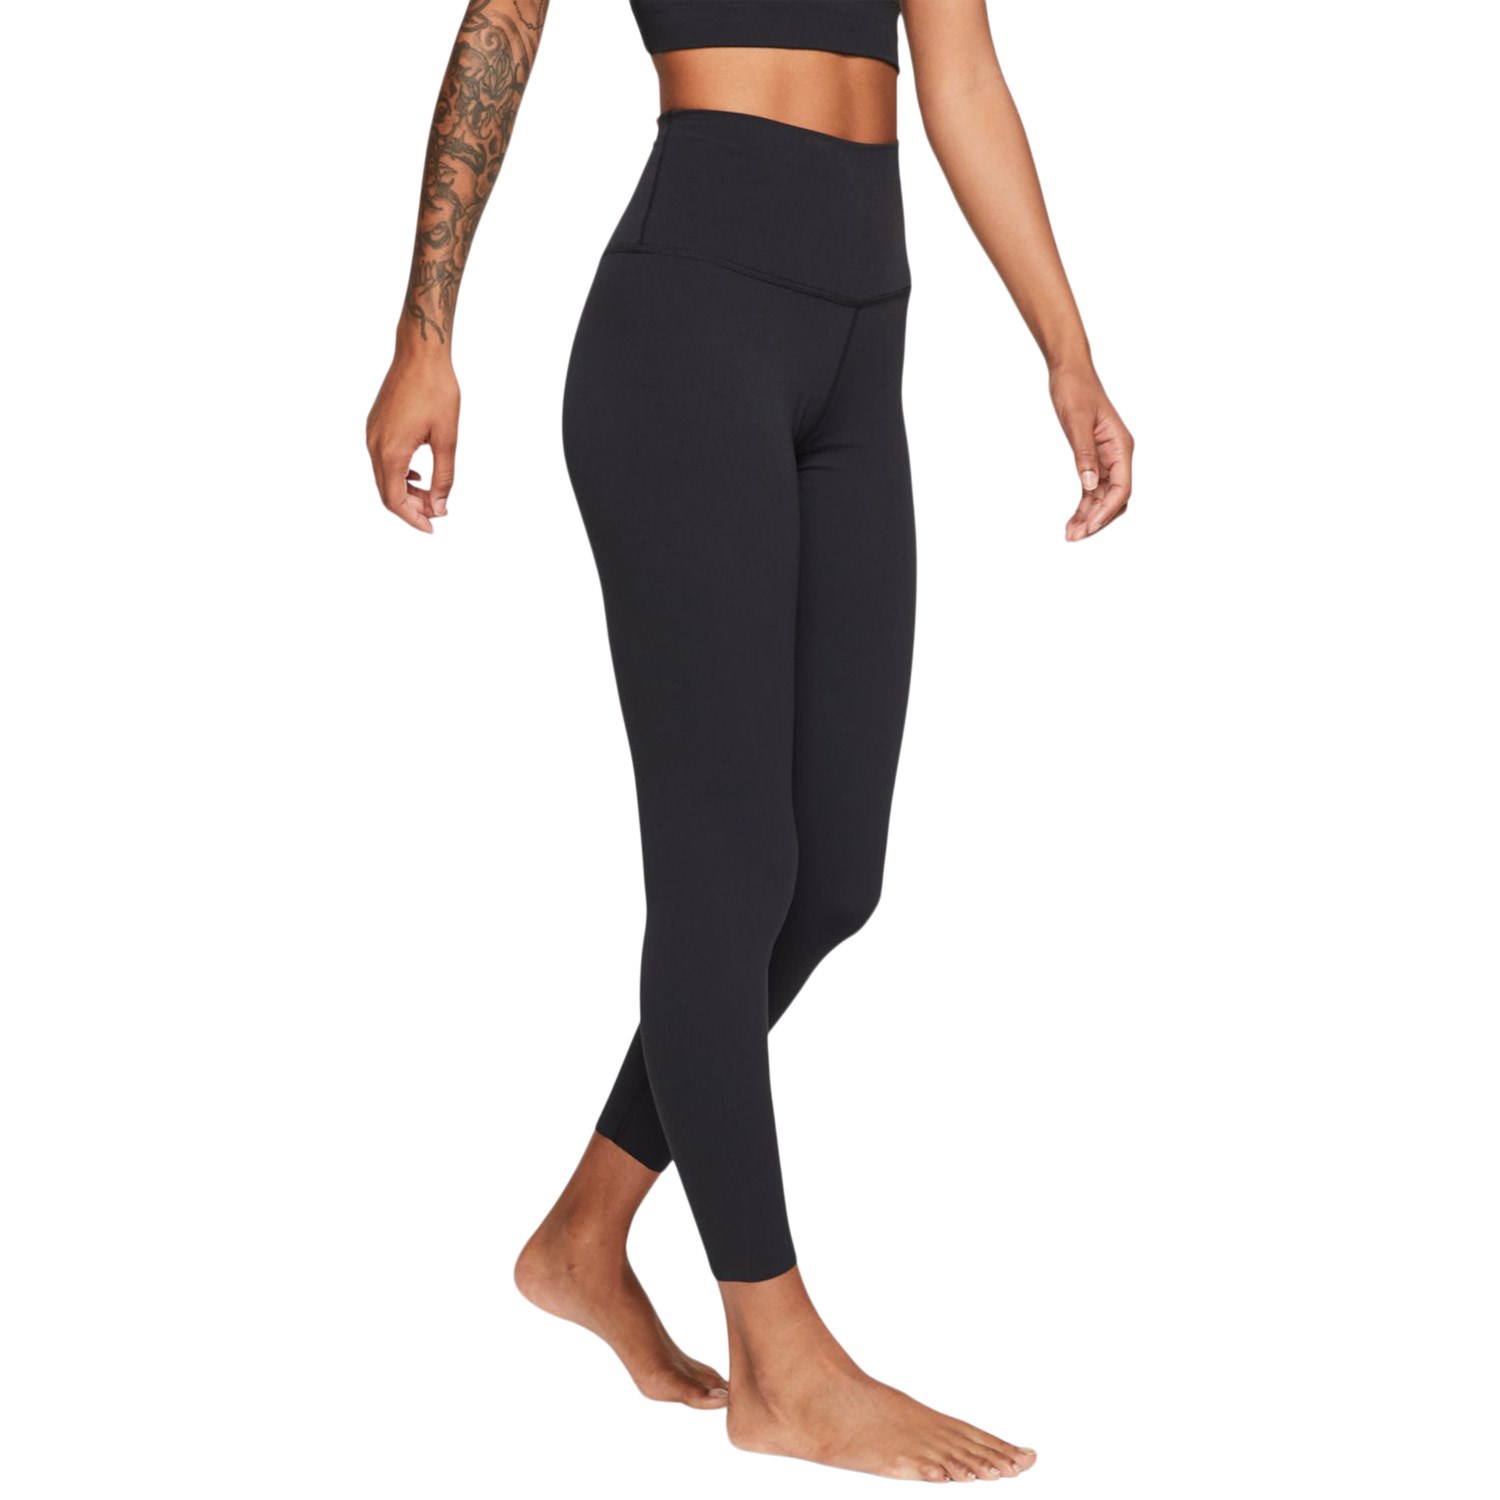 Nike Yoga Luxe Shorts (plus in Gray